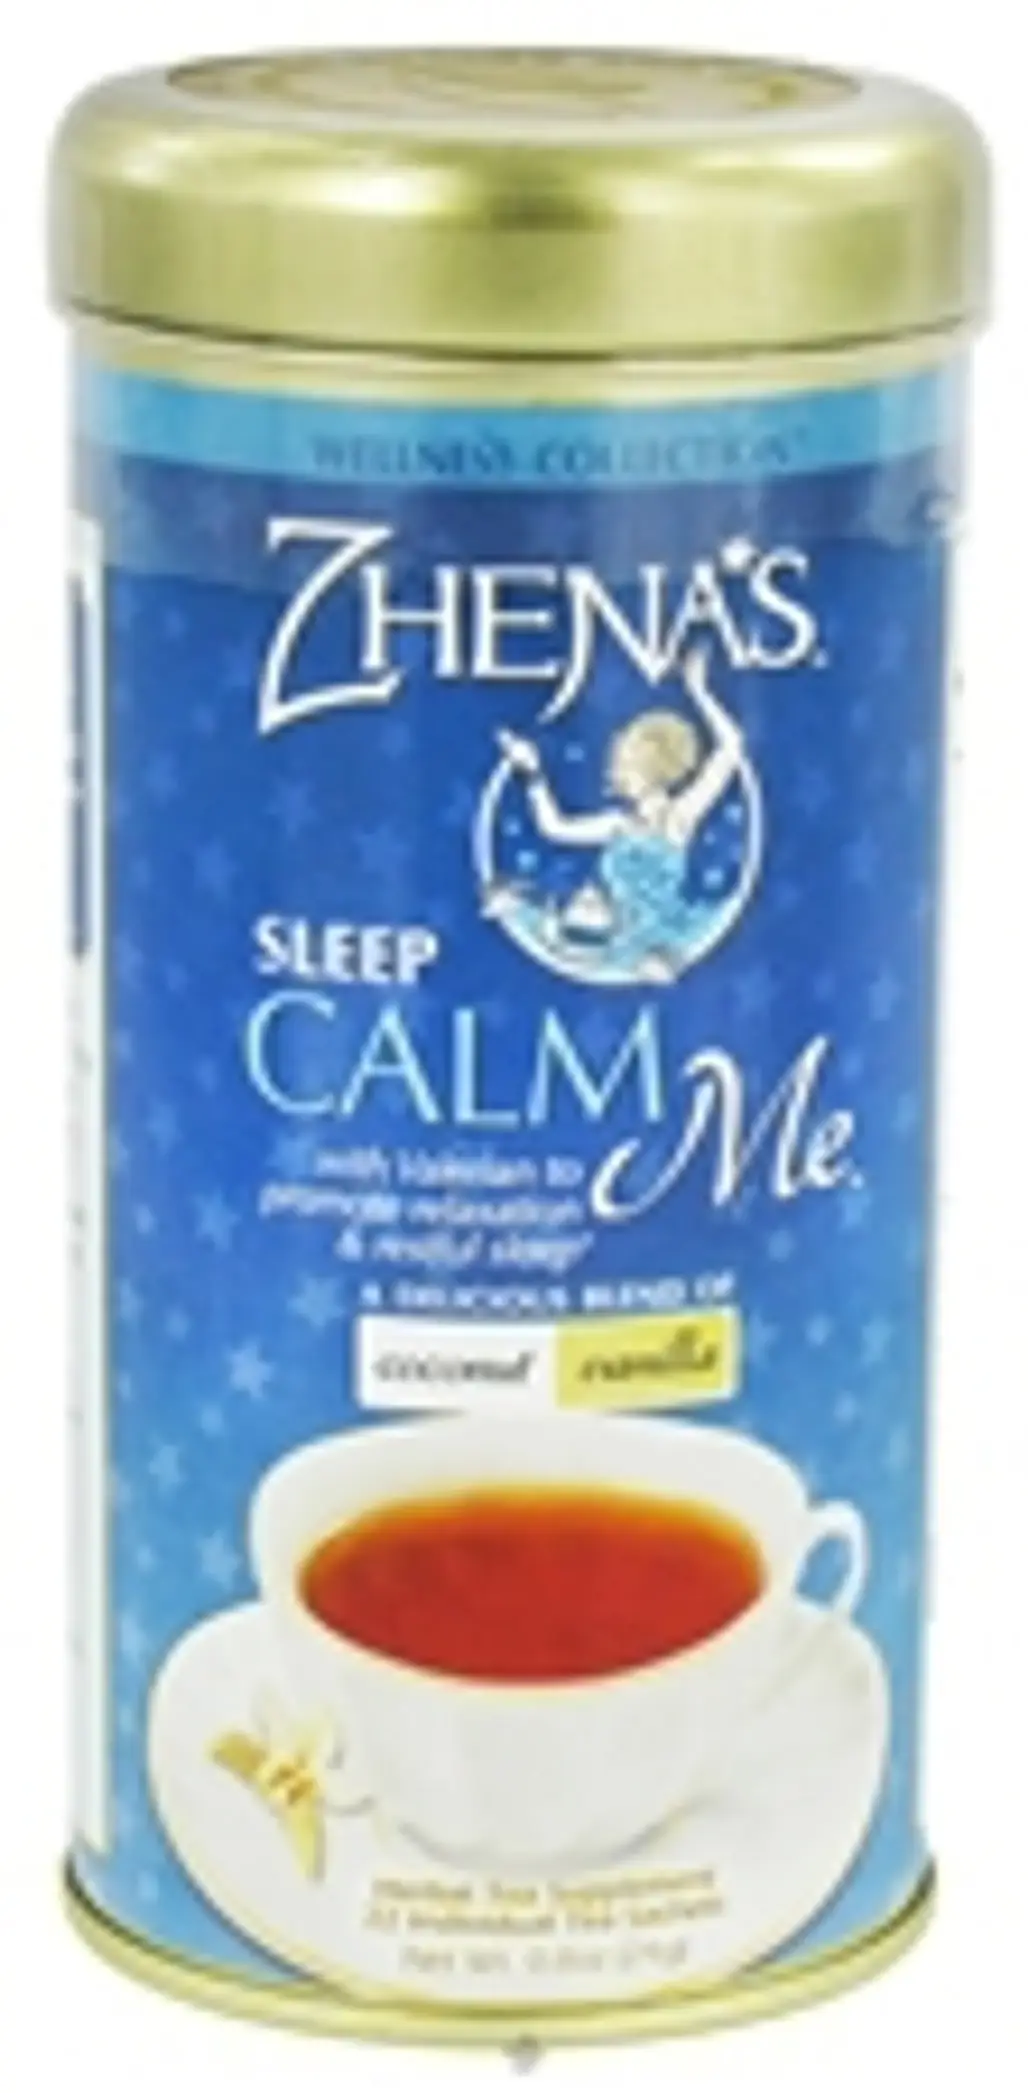 Zhena’s Gypsy Tea Calm Me Coconut and Vanilla